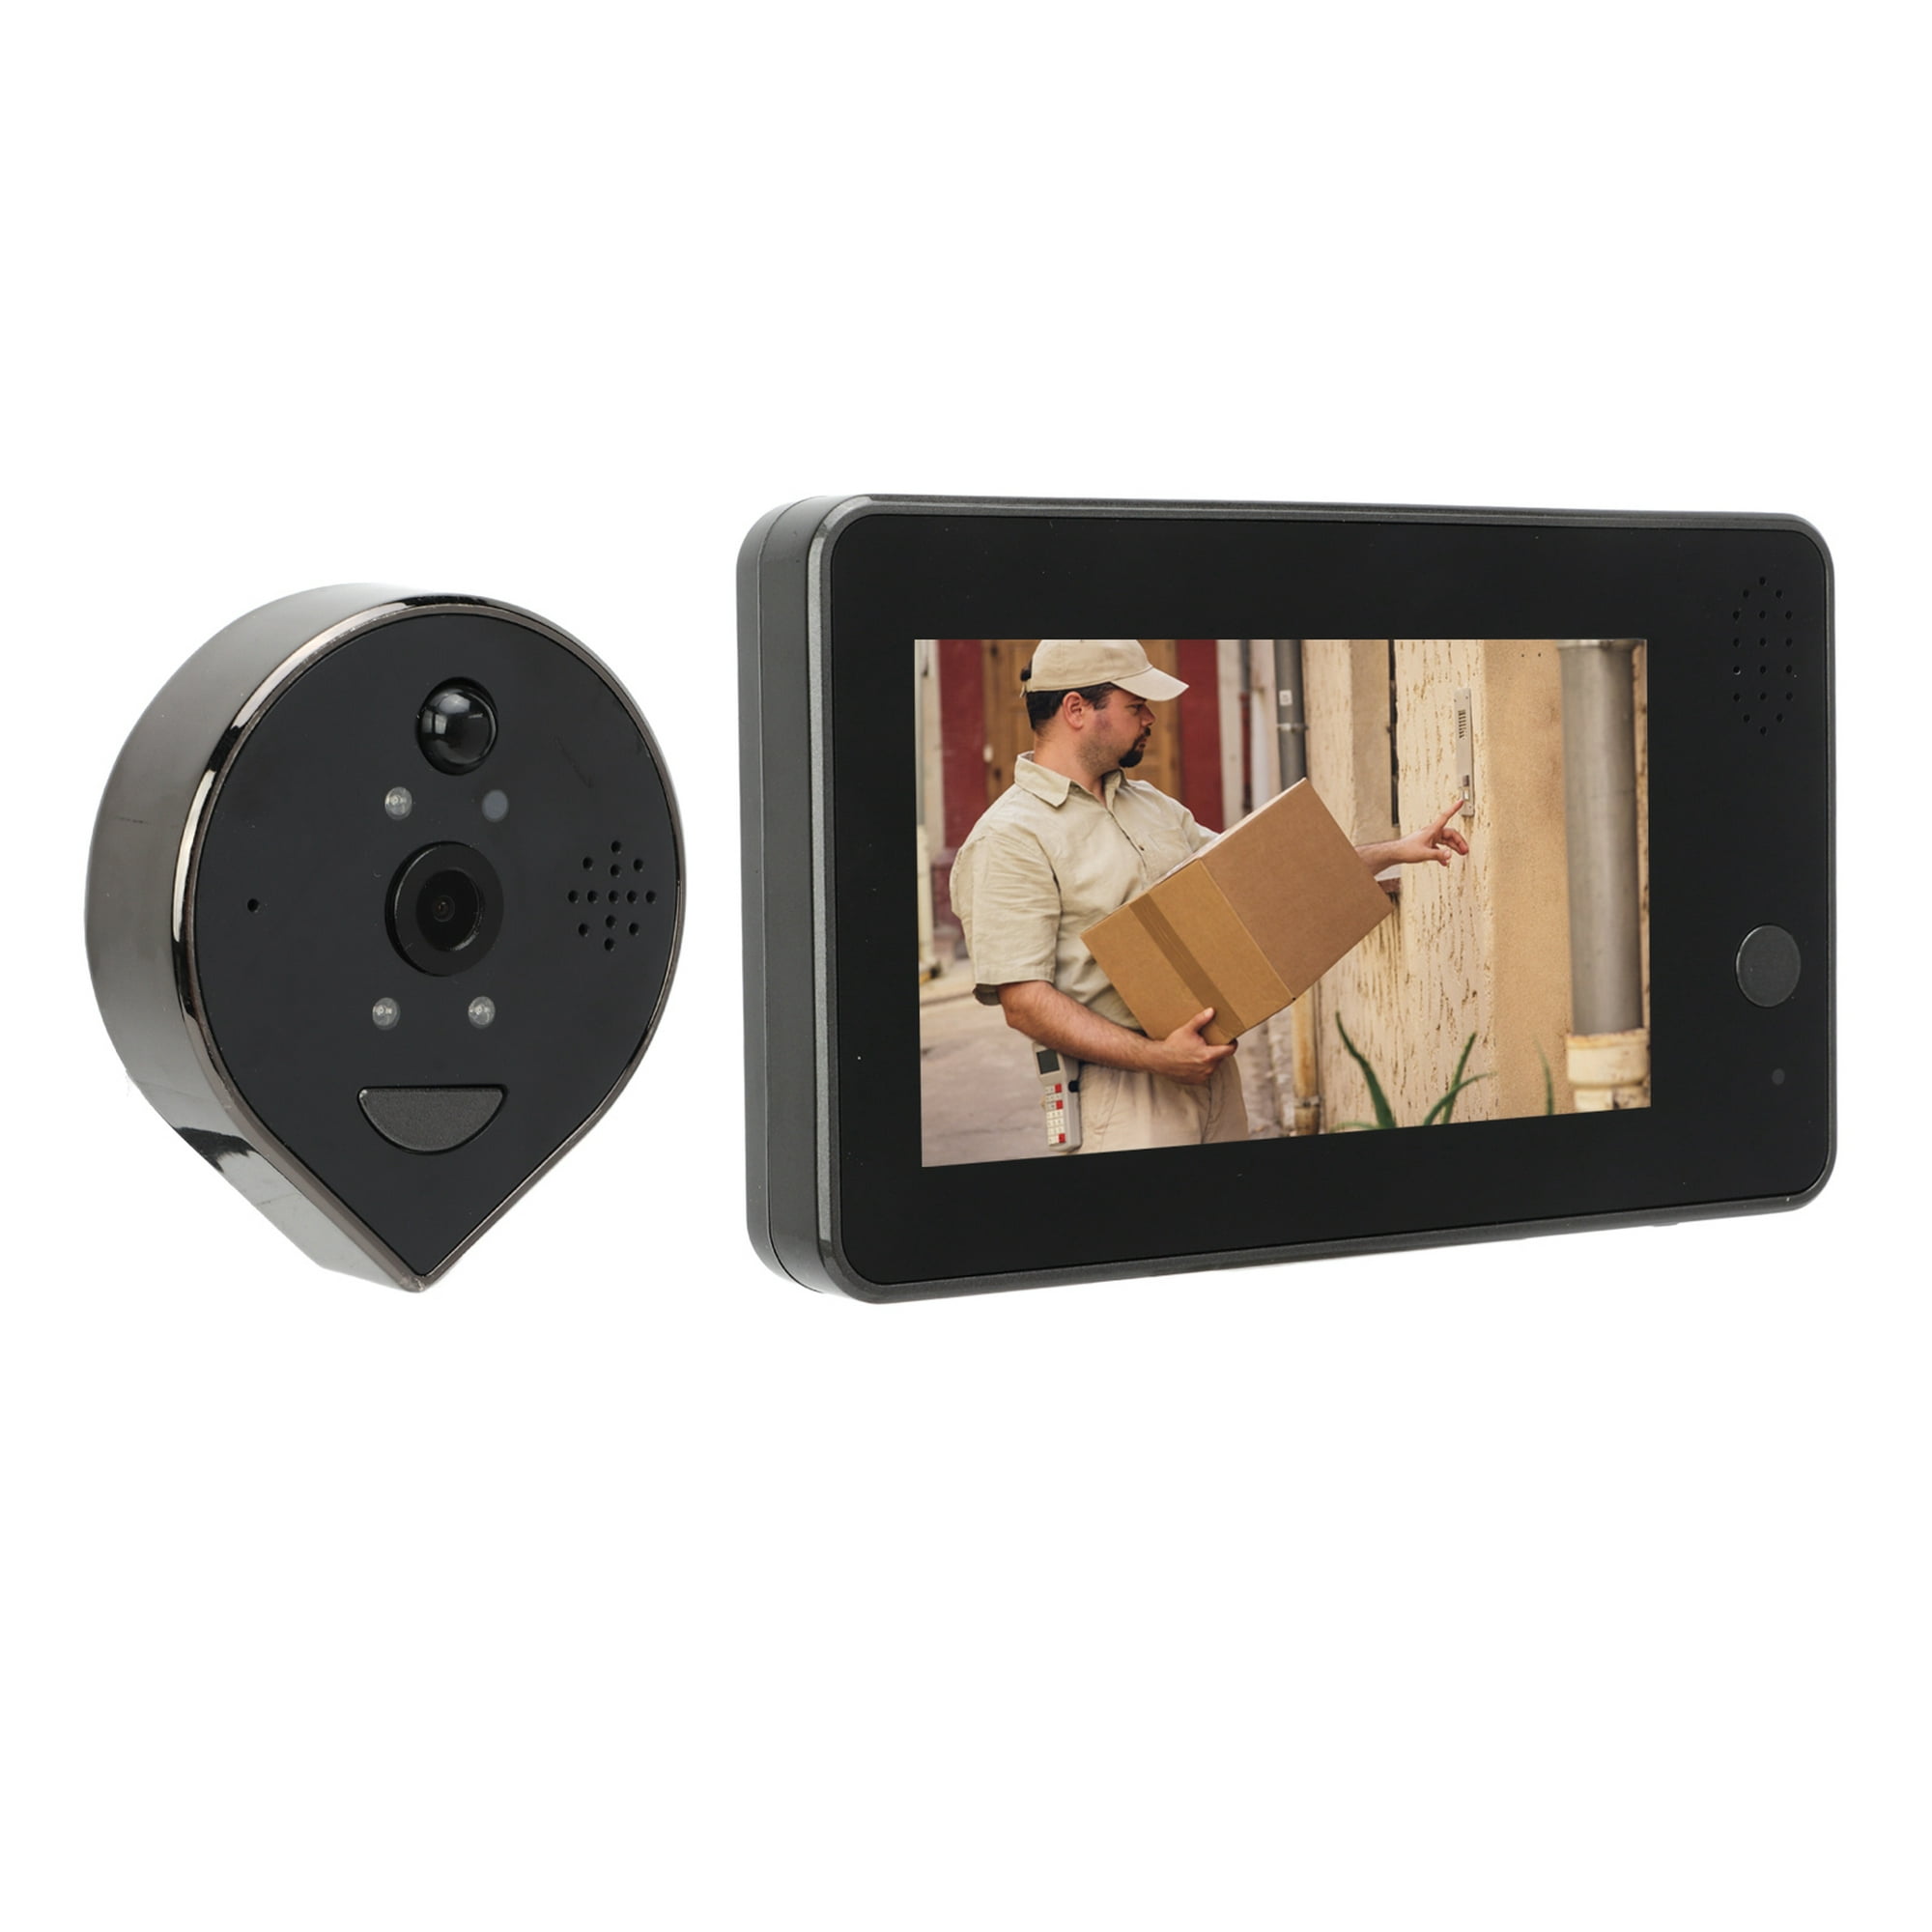 Visor de cámara de puerta, mirilla de puerta inteligente de 0,3 MP Visor de  mirilla de cámara inteligente multifuncional